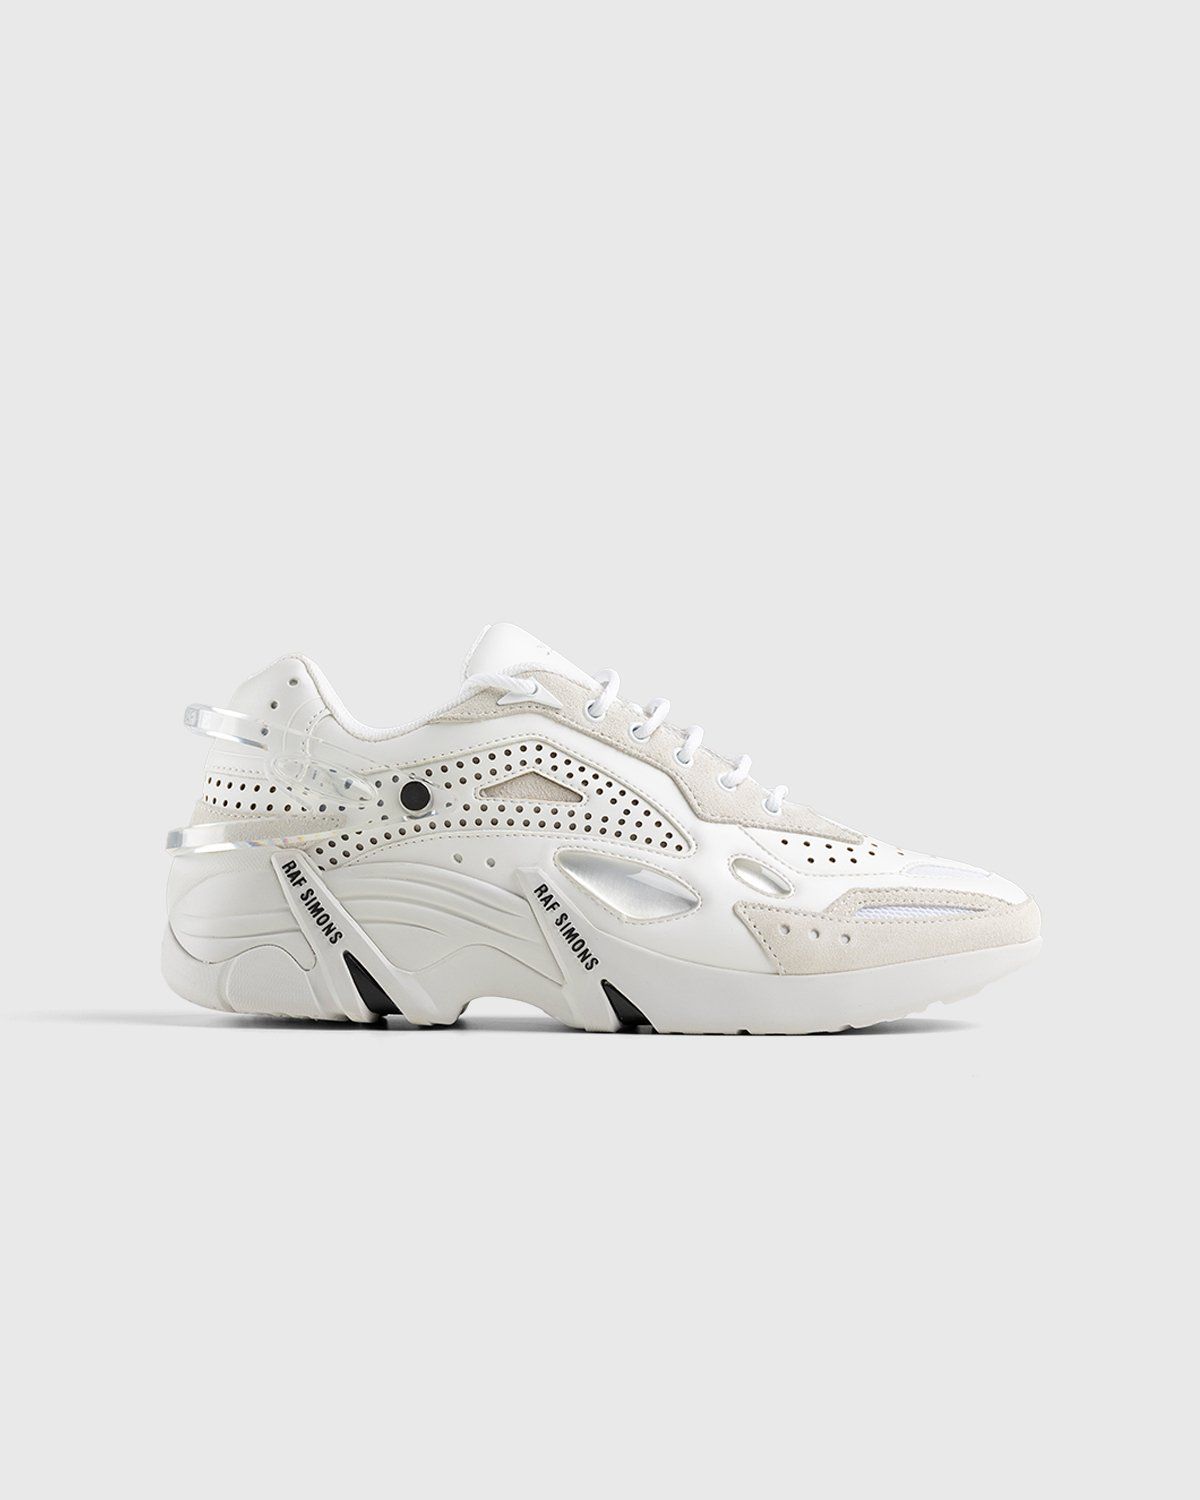 Raf Simons – Cylon 21 White - Low Top Sneakers - White - Image 1